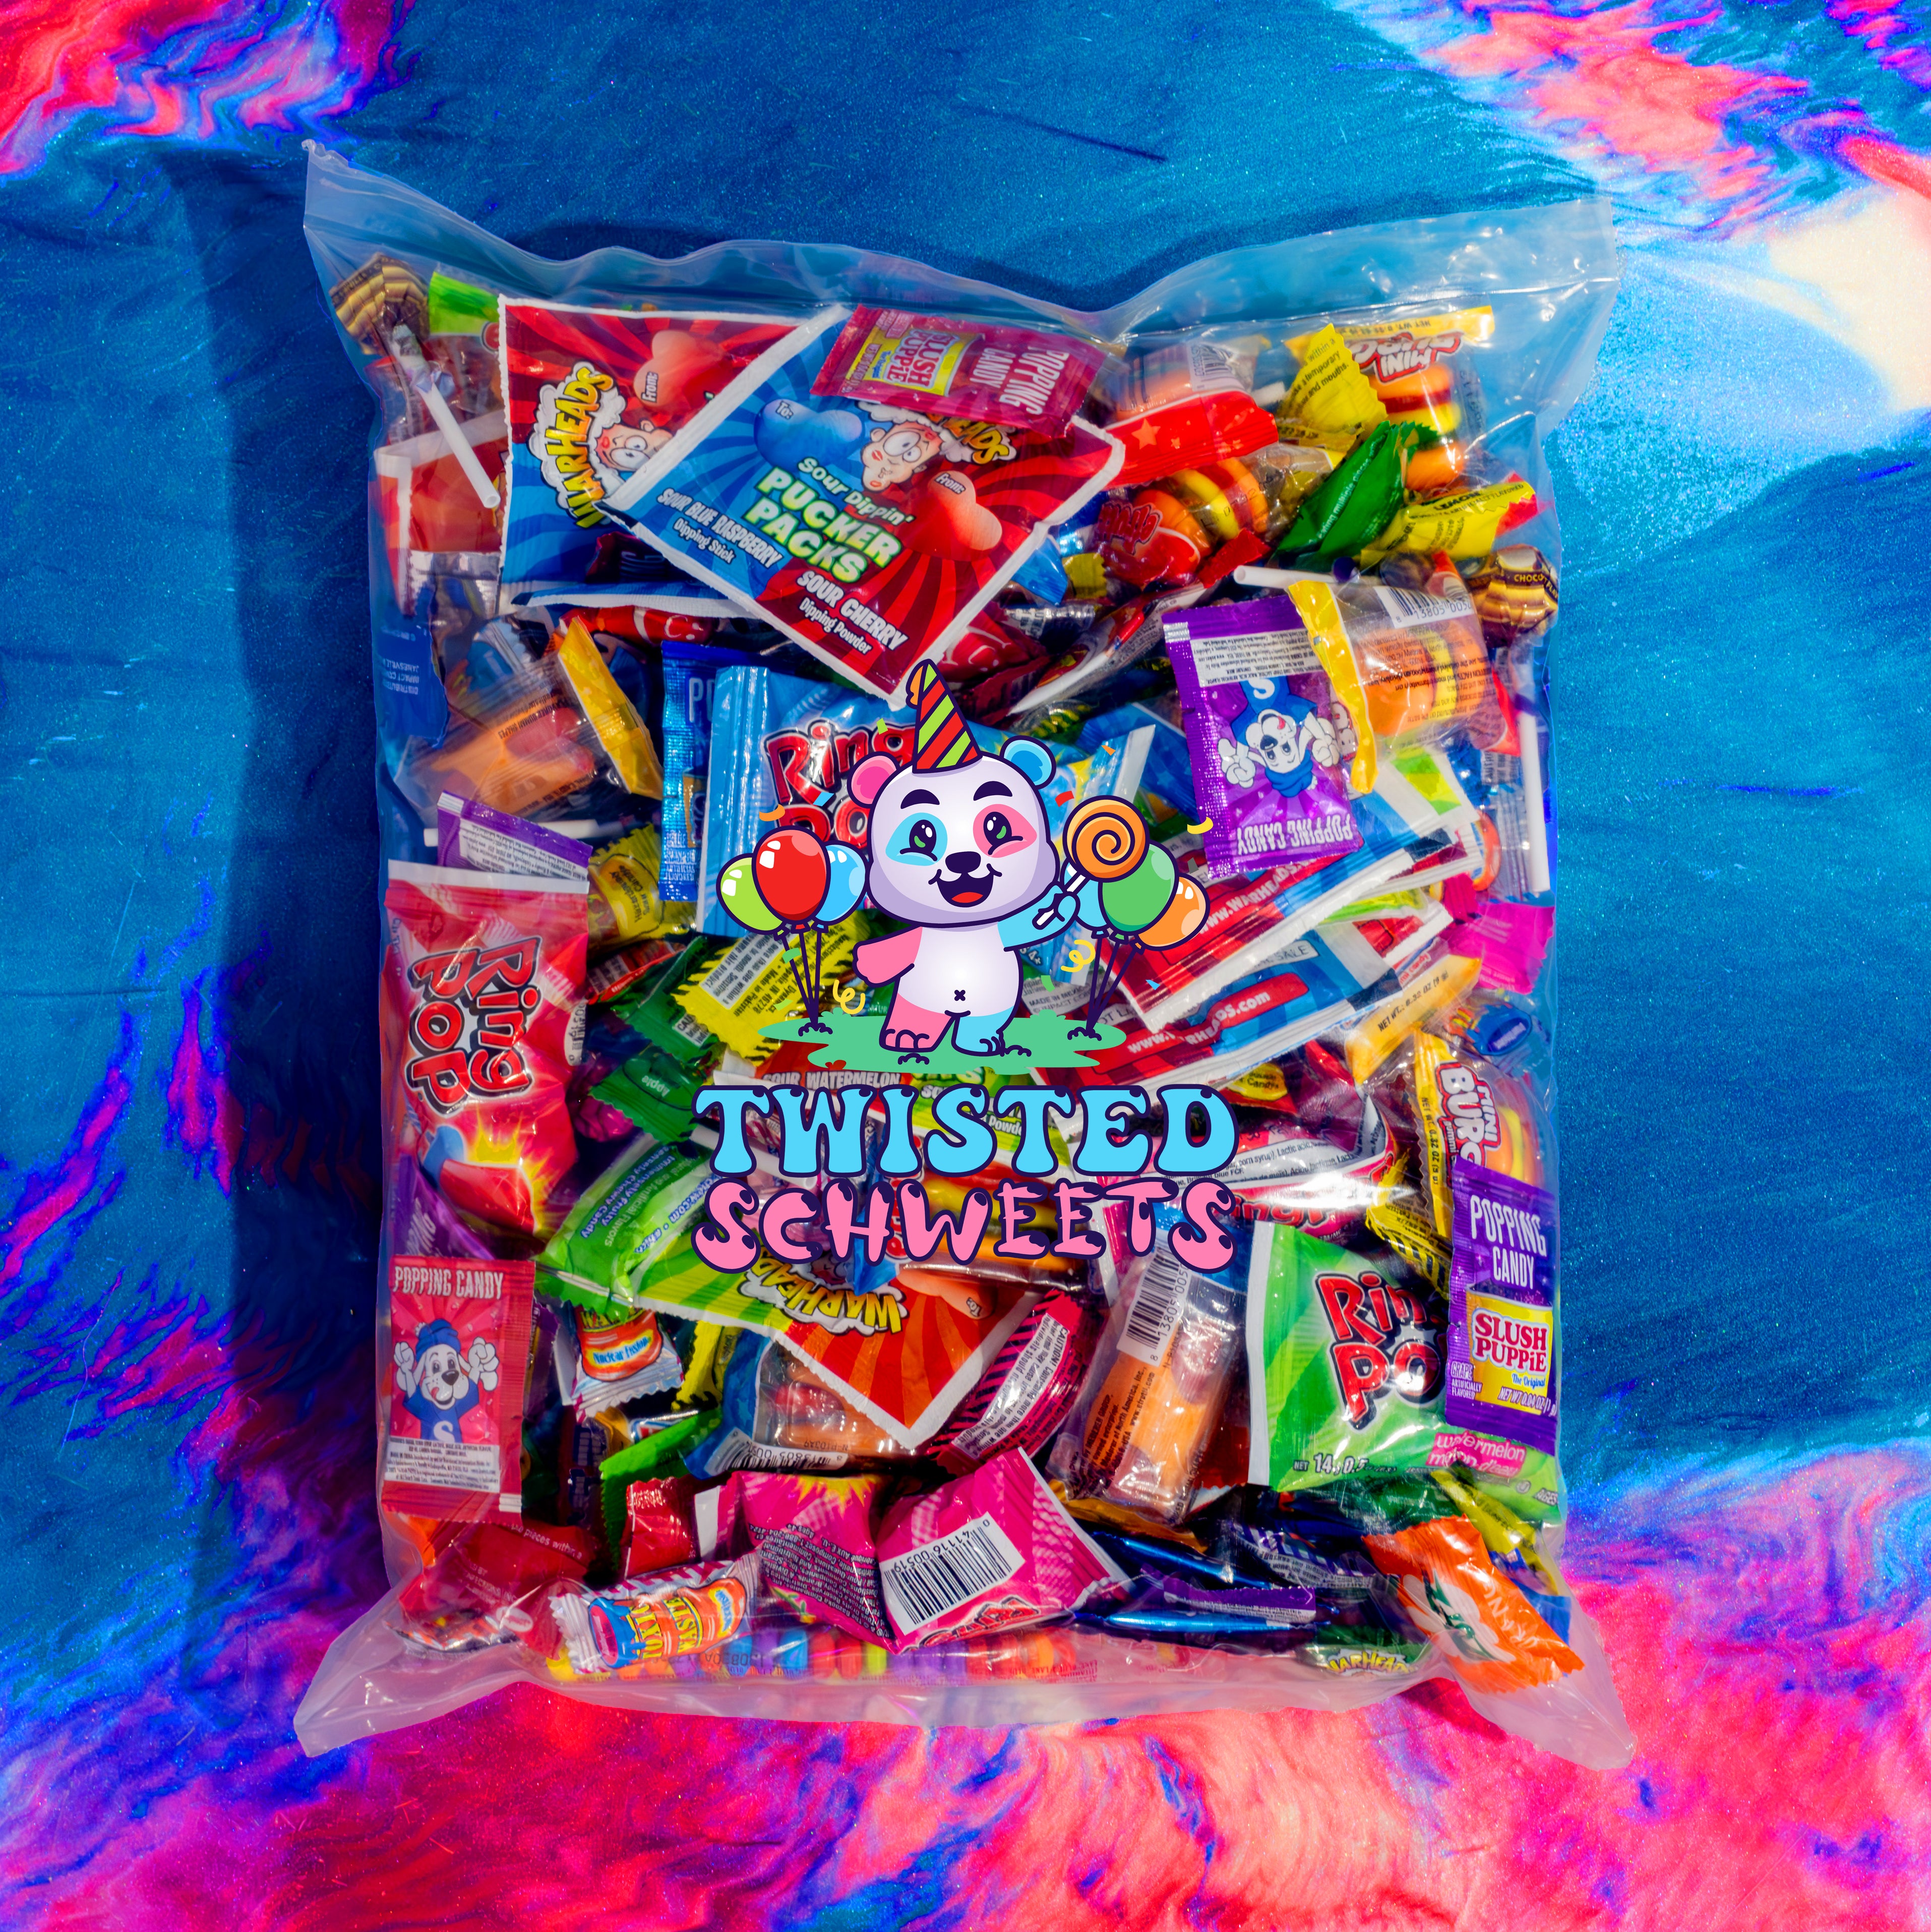 Party Piñata Packs - Premium Party Candy Mix - Sweet & Sour Mix